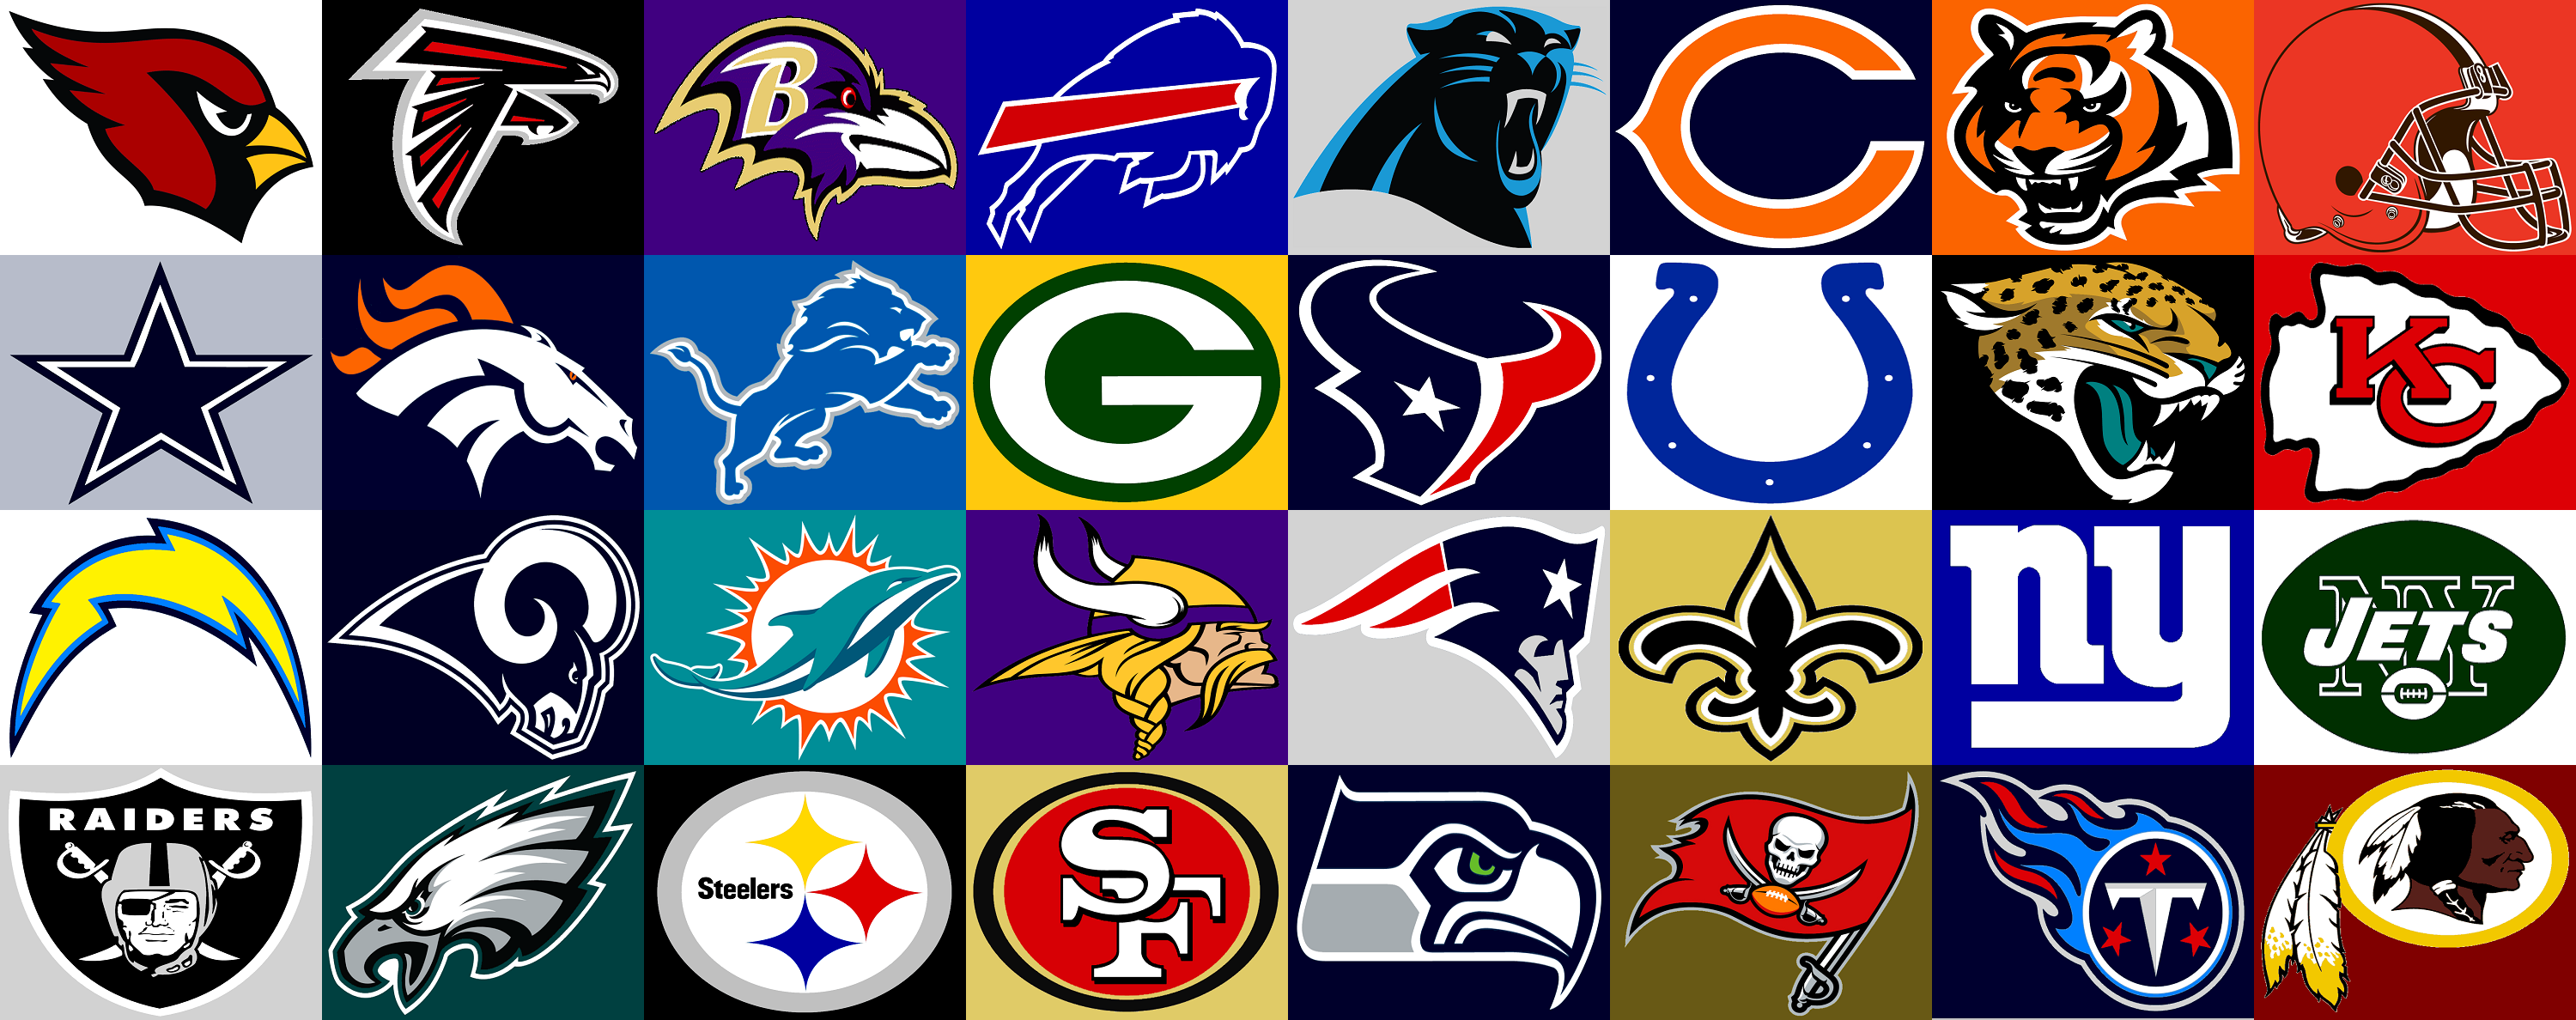 NFL Team Logos by Chenglor55 on DeviantArt